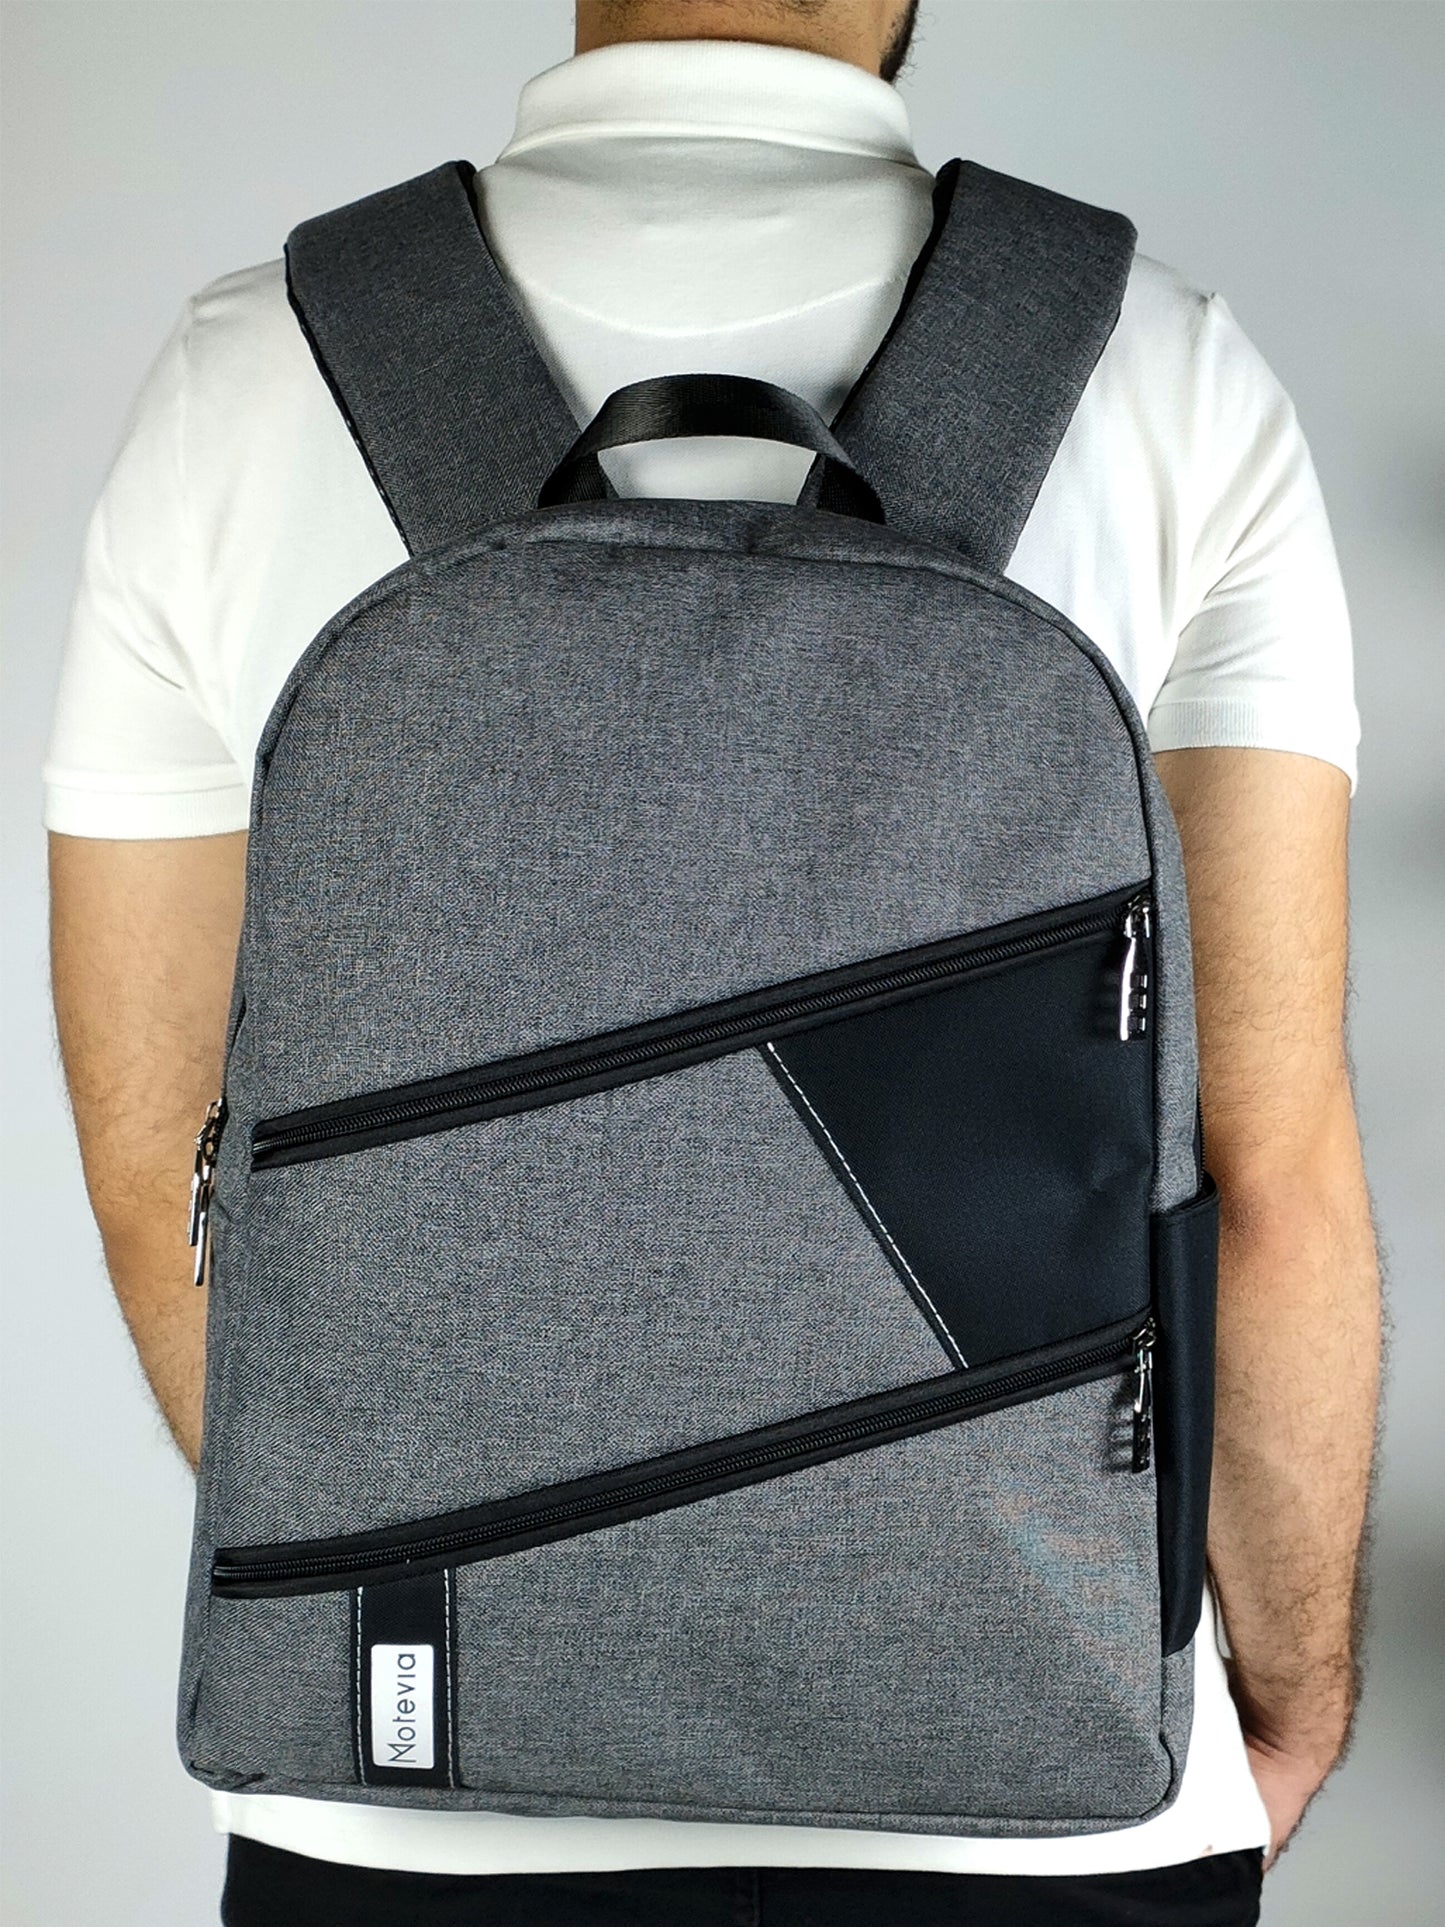 Roomy Laptop Backpack